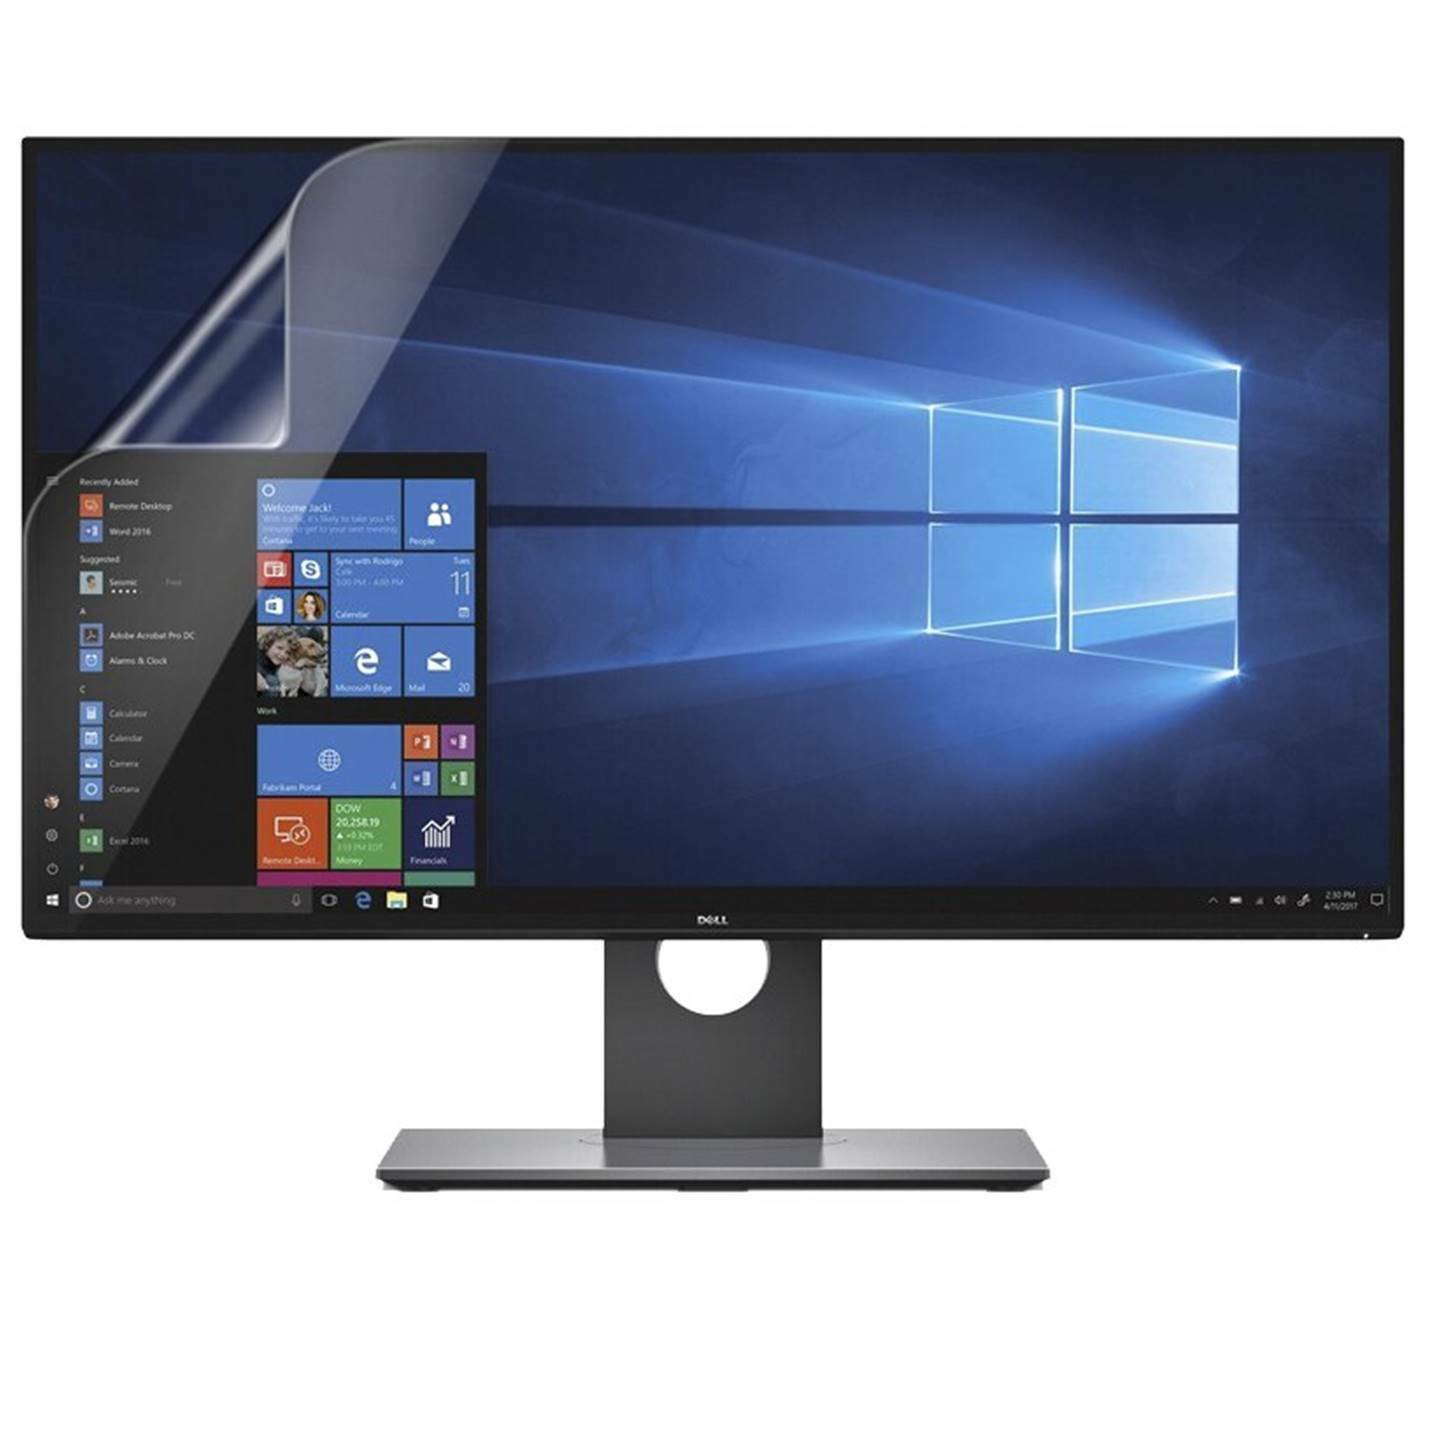 Anti-Glare Anti Blue Light Screen Protector For Desktop Computer Monitor (16:9)